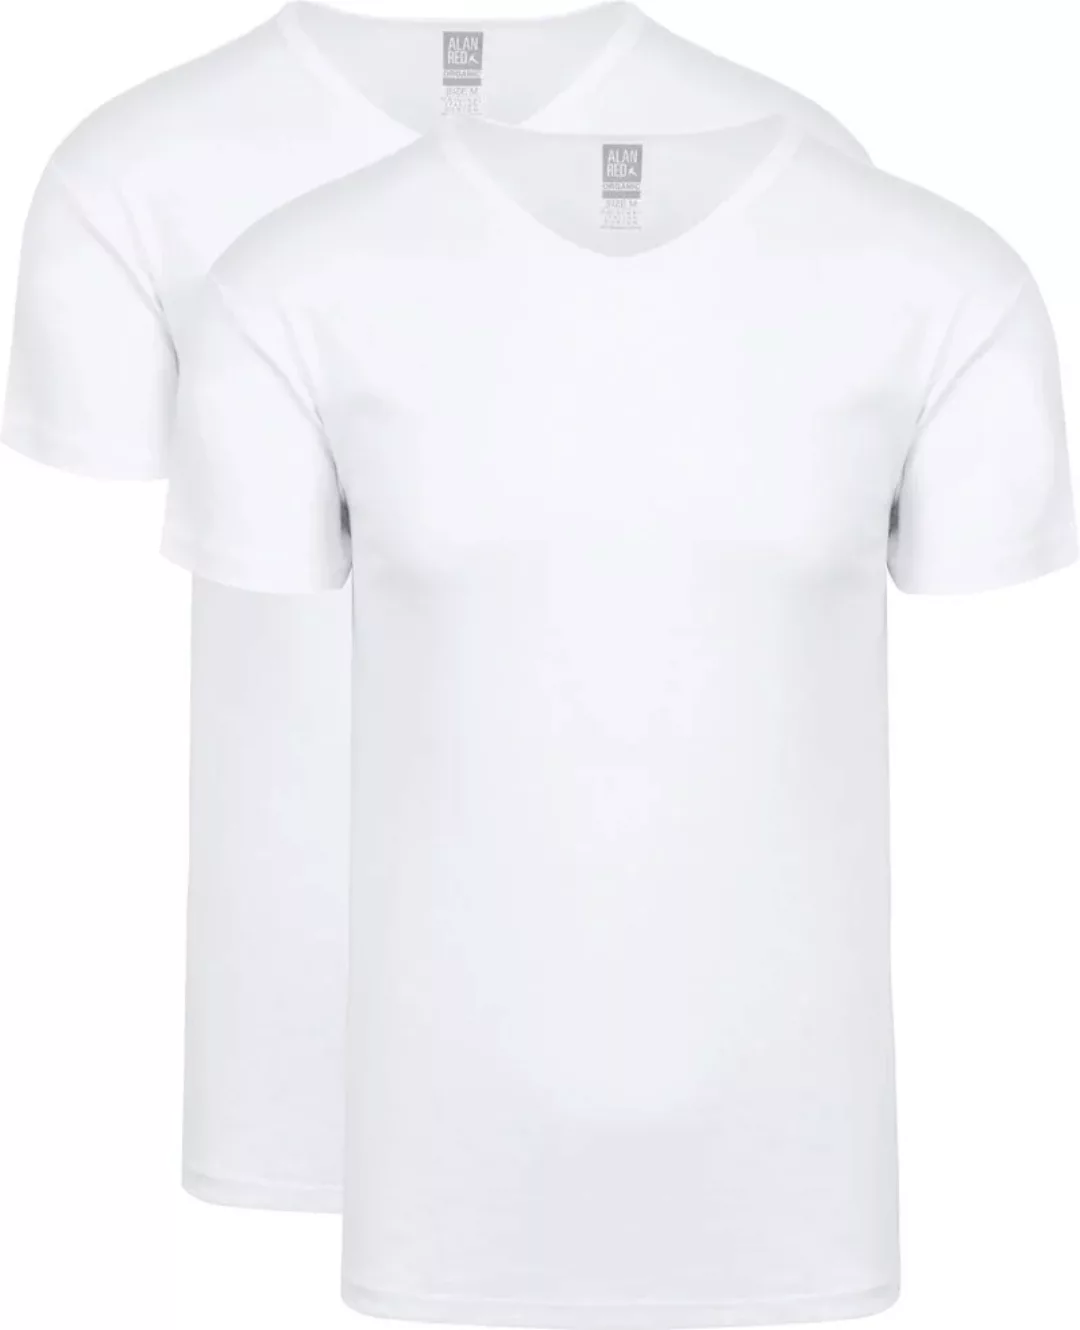 Alan Red Organic T-Shirt V-Ausschnitt Weiß 2er-Pack - Größe L günstig online kaufen